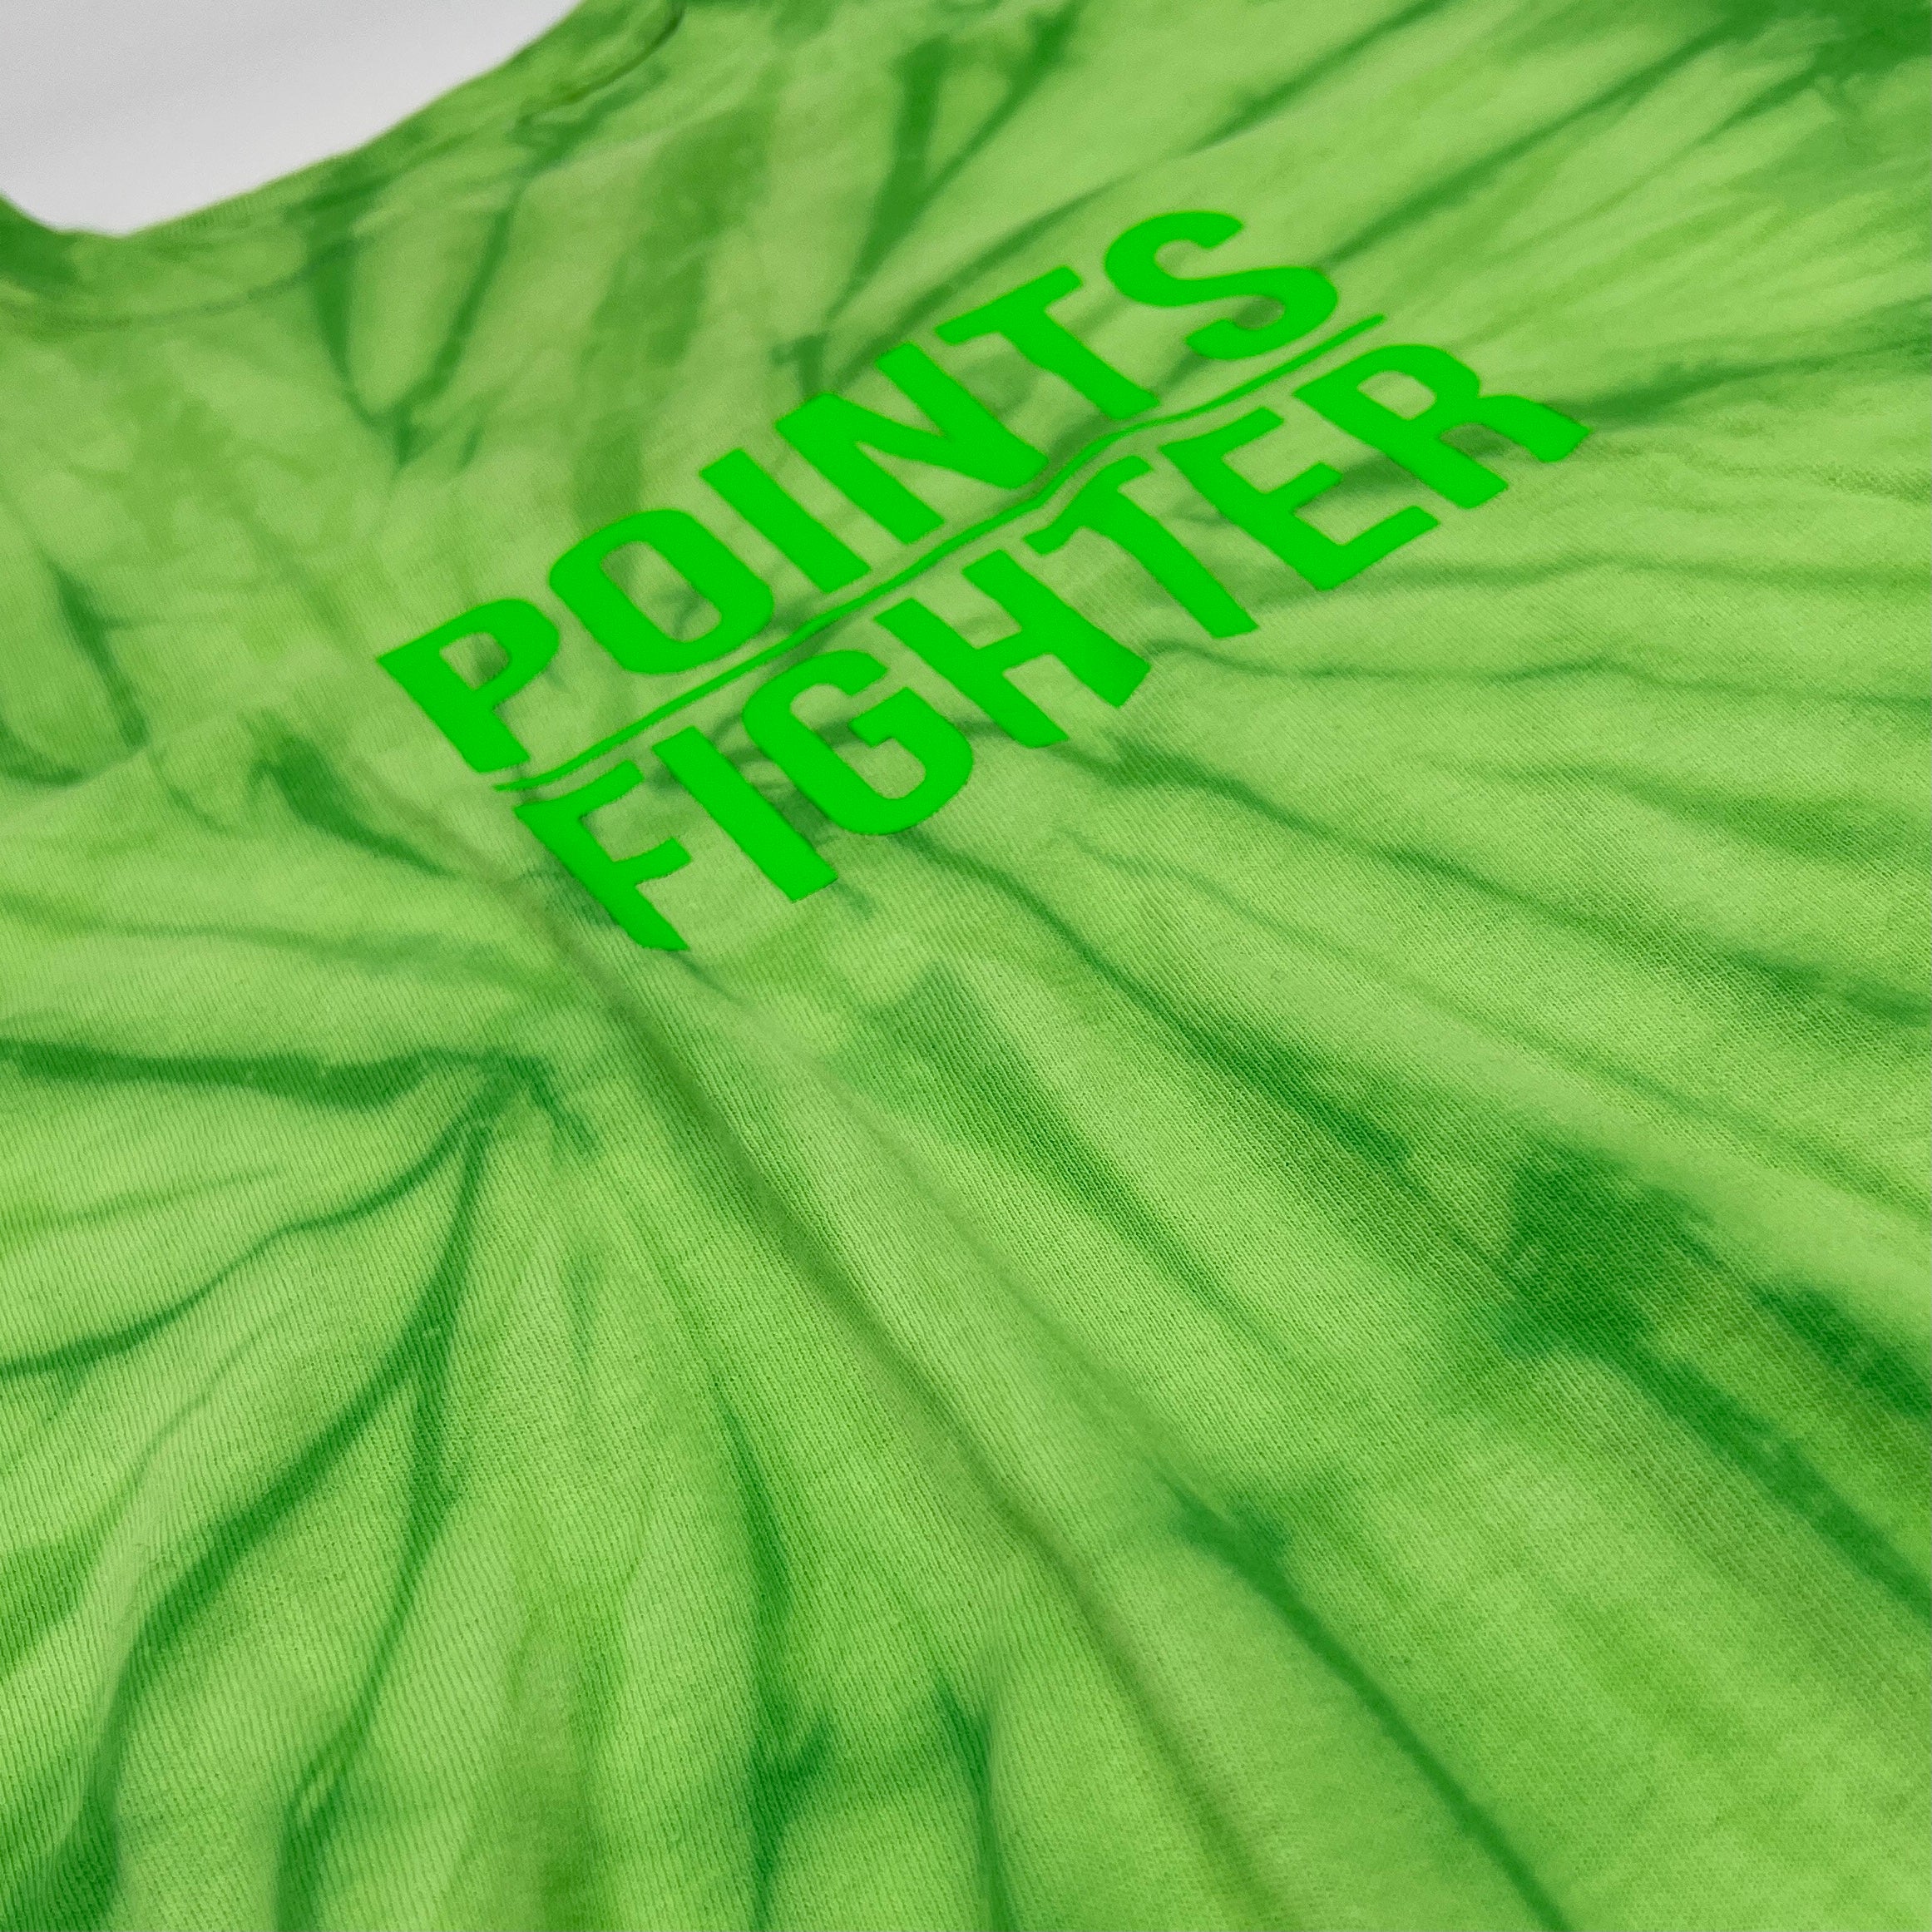 Points Fighter Tie-Dye T-Shirt - Green